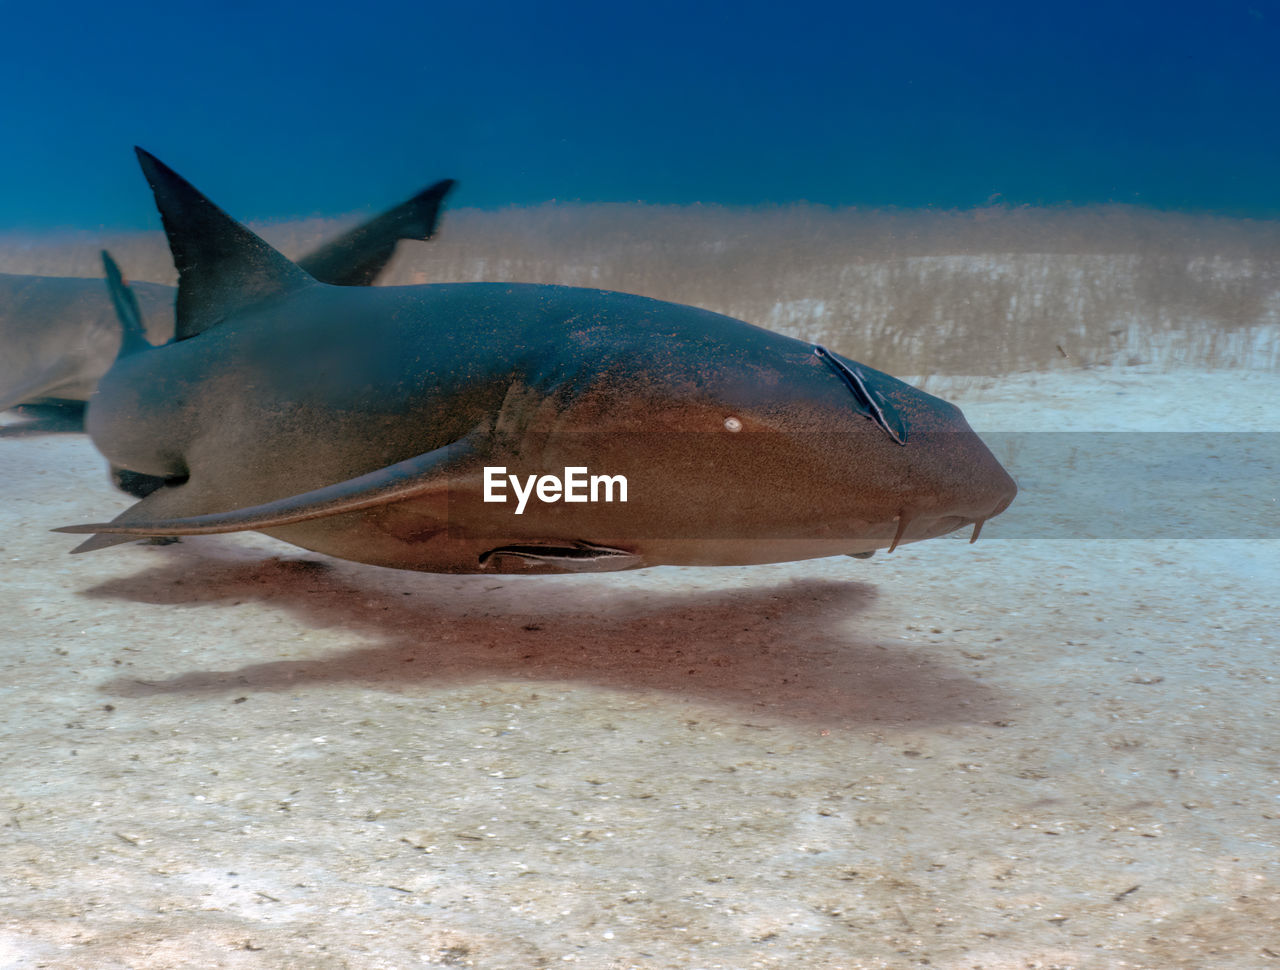 A nurse shark - ginglymostoma cirratum - in bimini, bahamas